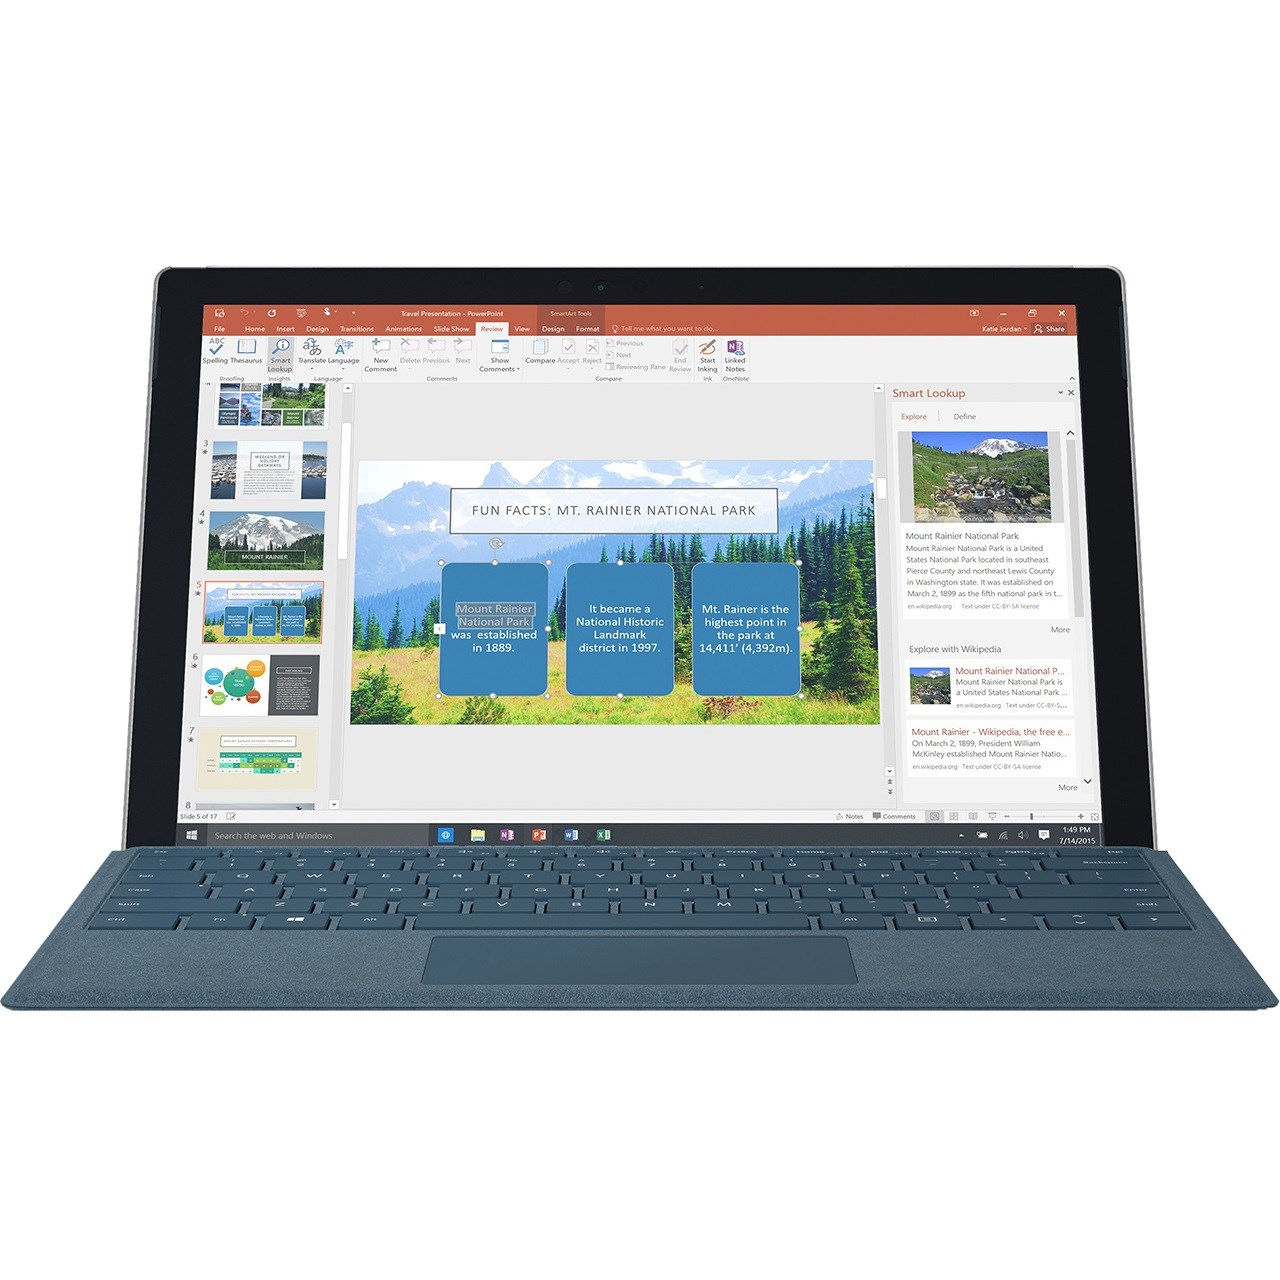 تبلت مایکروسافت مدل Surface Pro 2017 - A به همراه کیبورد سیگنیچر رنگ آبی کبالت و کیف چرم صنوبر  - ظرفیت 128 گیگابایت